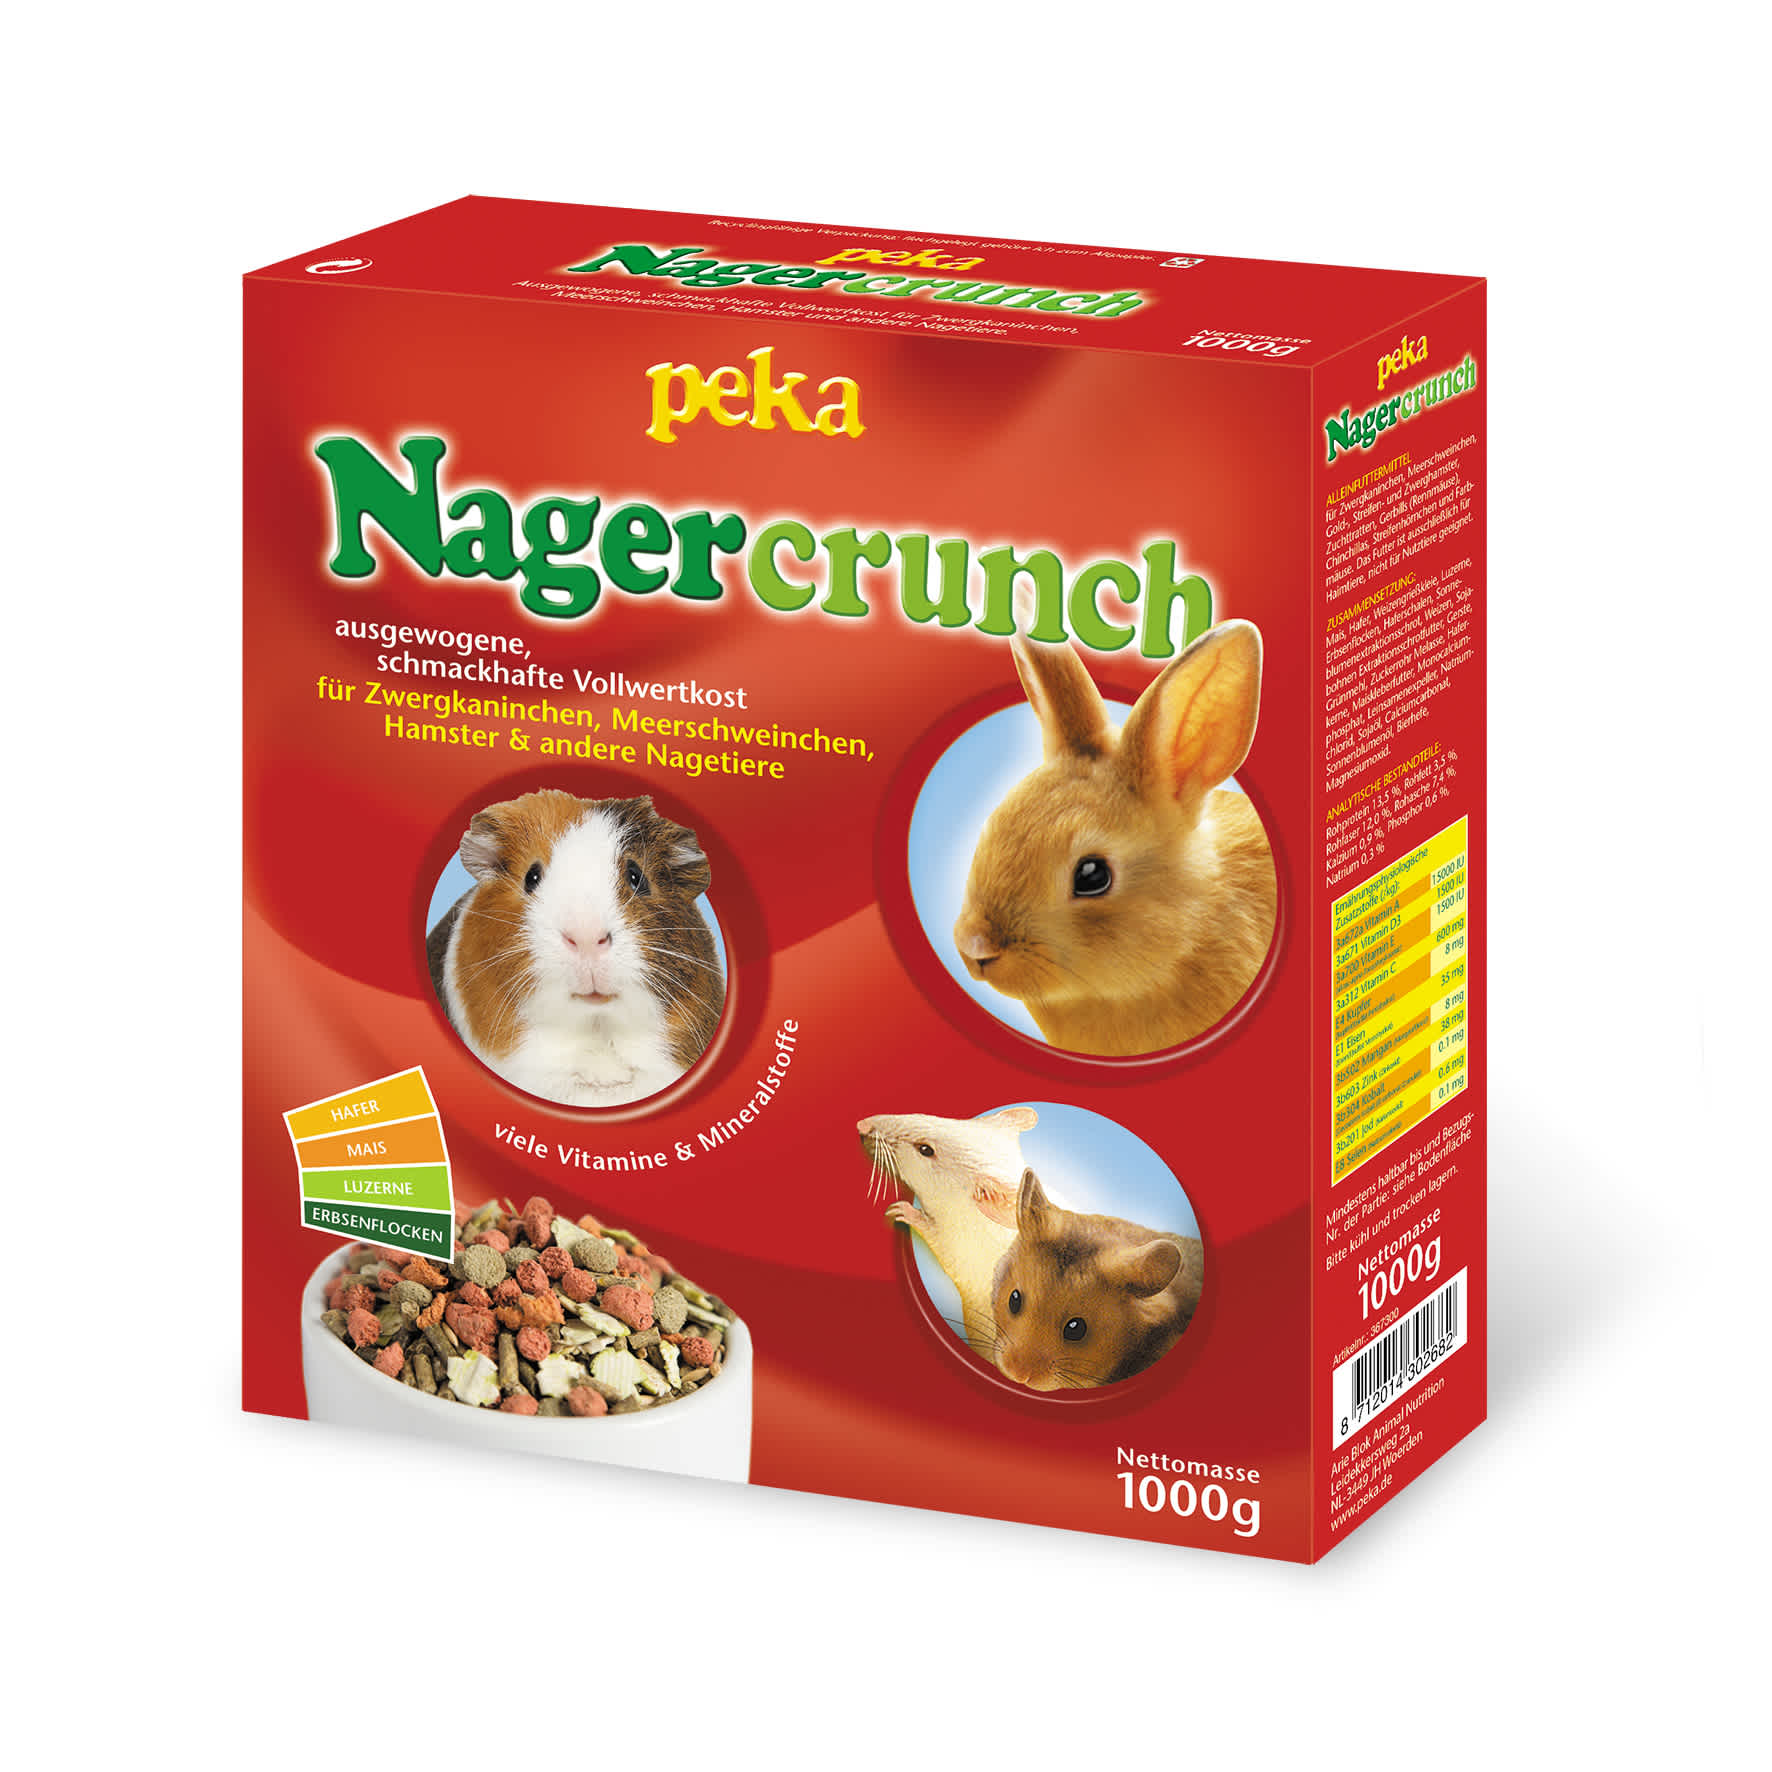 Peka Nagercrunch packshot